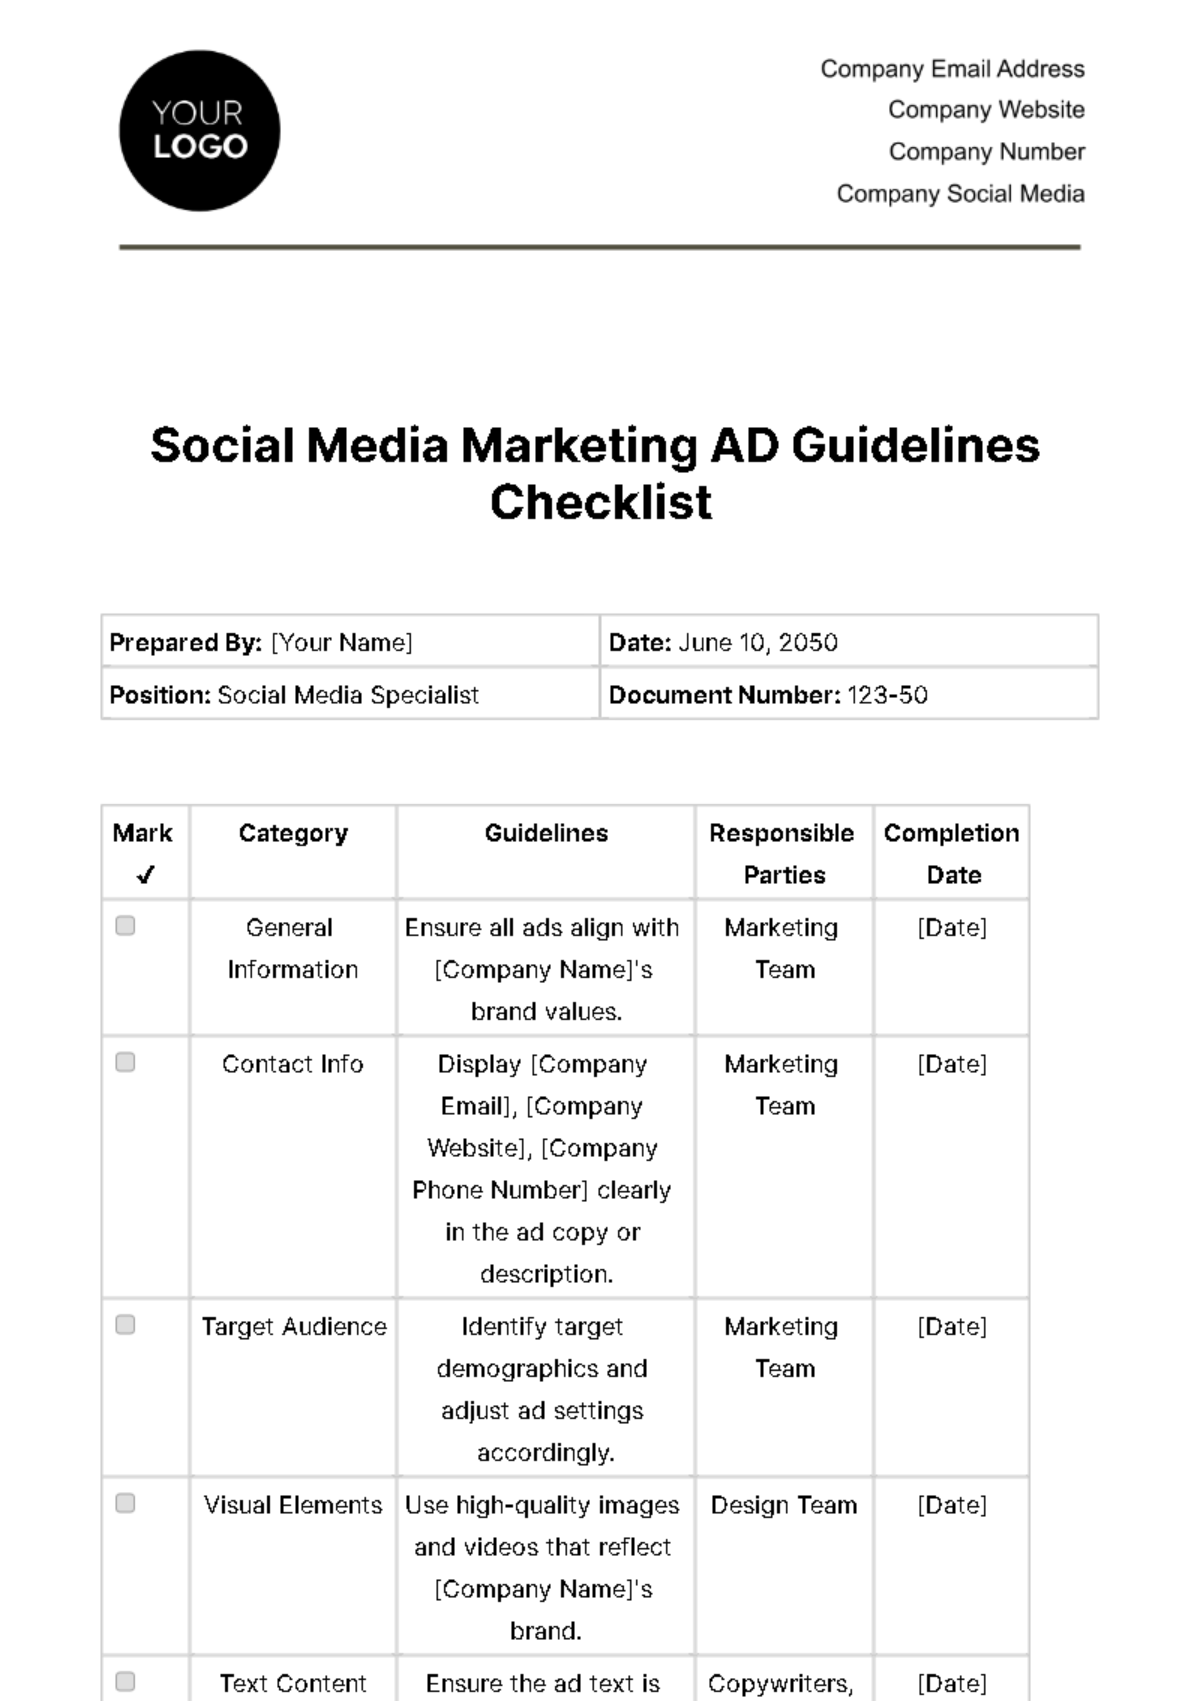 Social Media Marketing Ad Guidelines Checklist Template